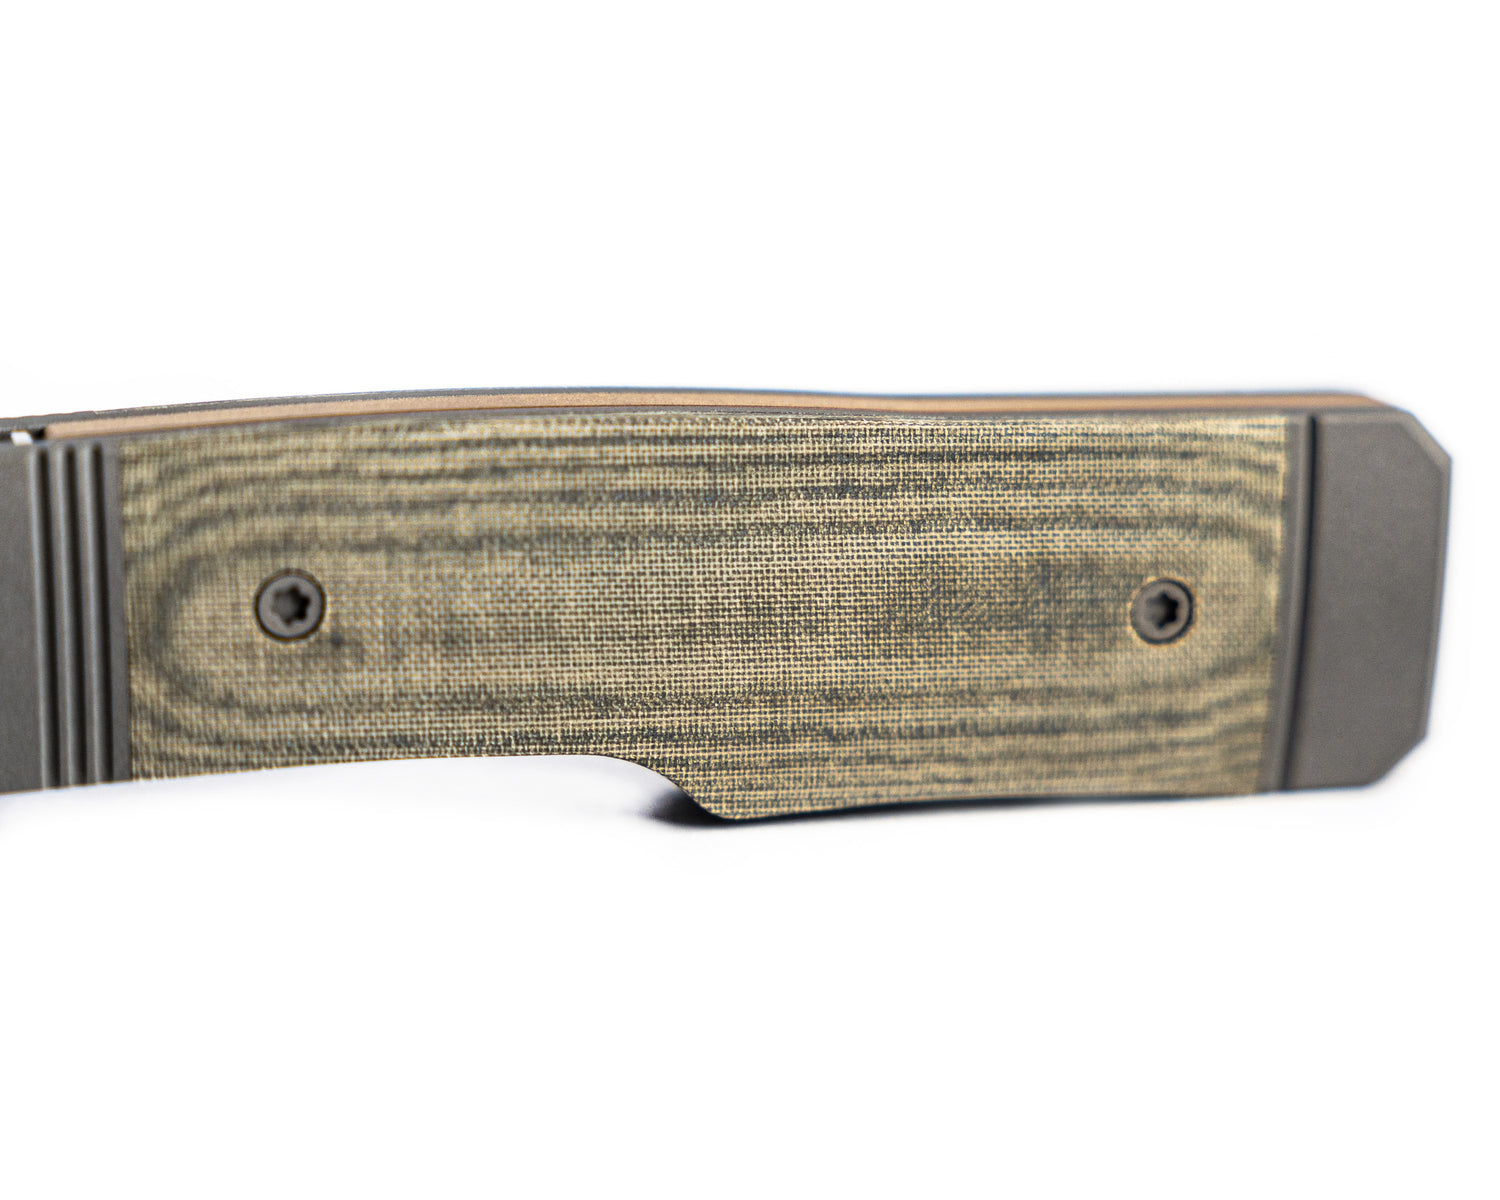 Gunslinger Jack Knife micarta handle scales on white background